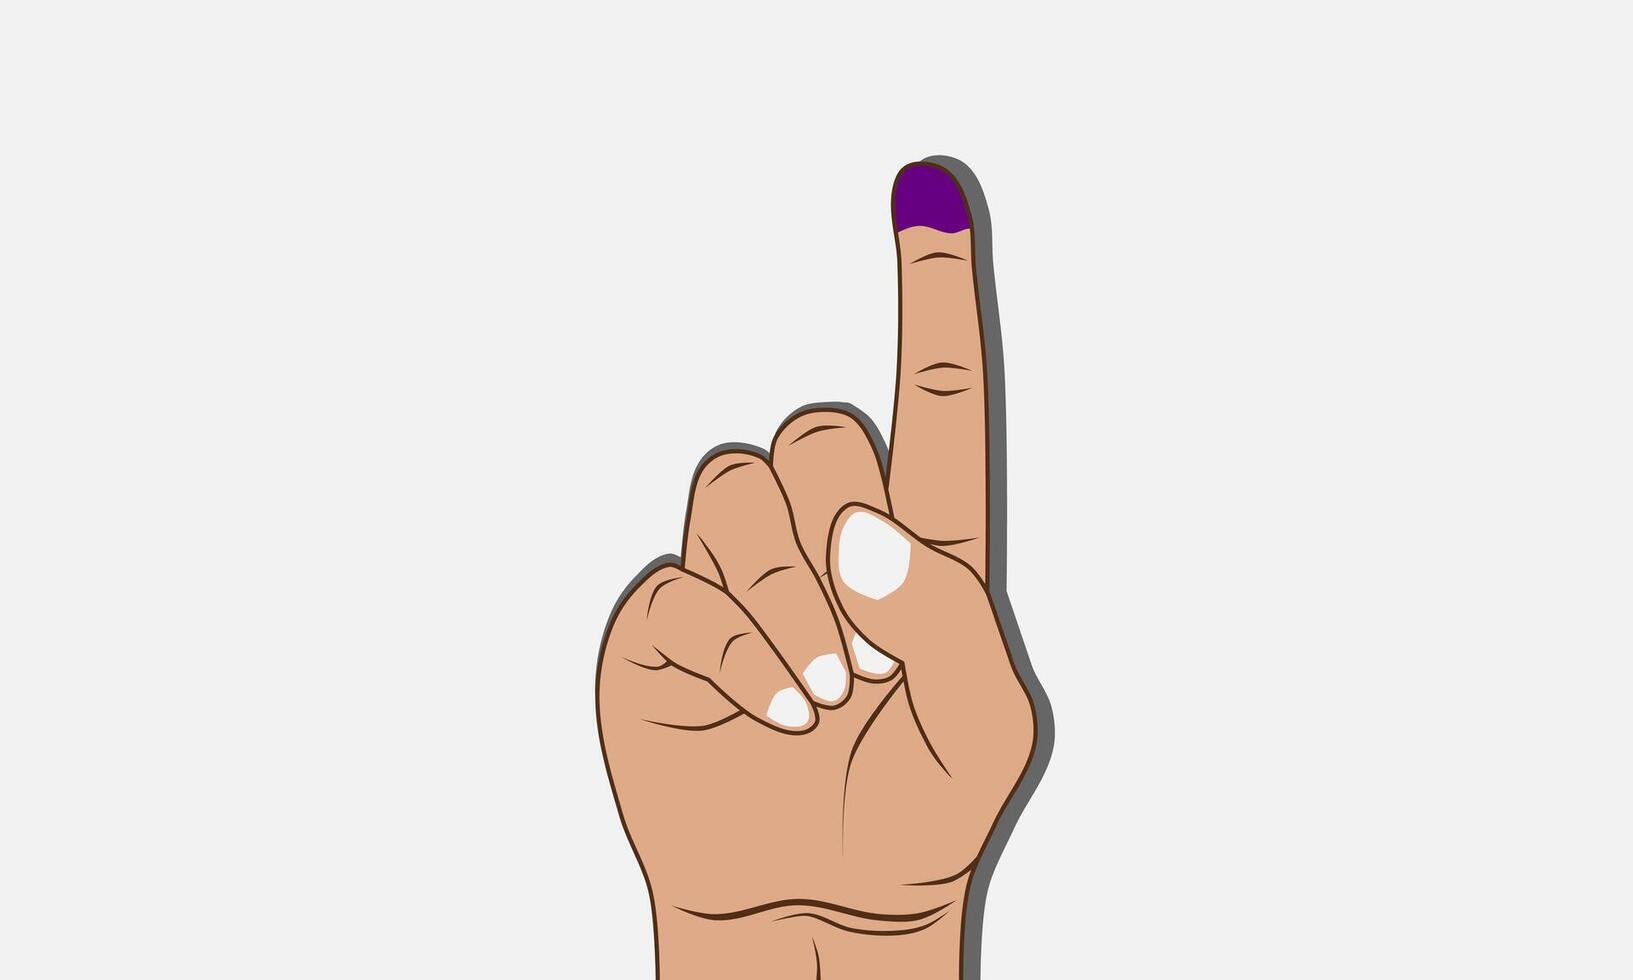 Index Finger mit Blau oder lila Tinte. Präsidentschaftswahl Wahl Konzept. vektor